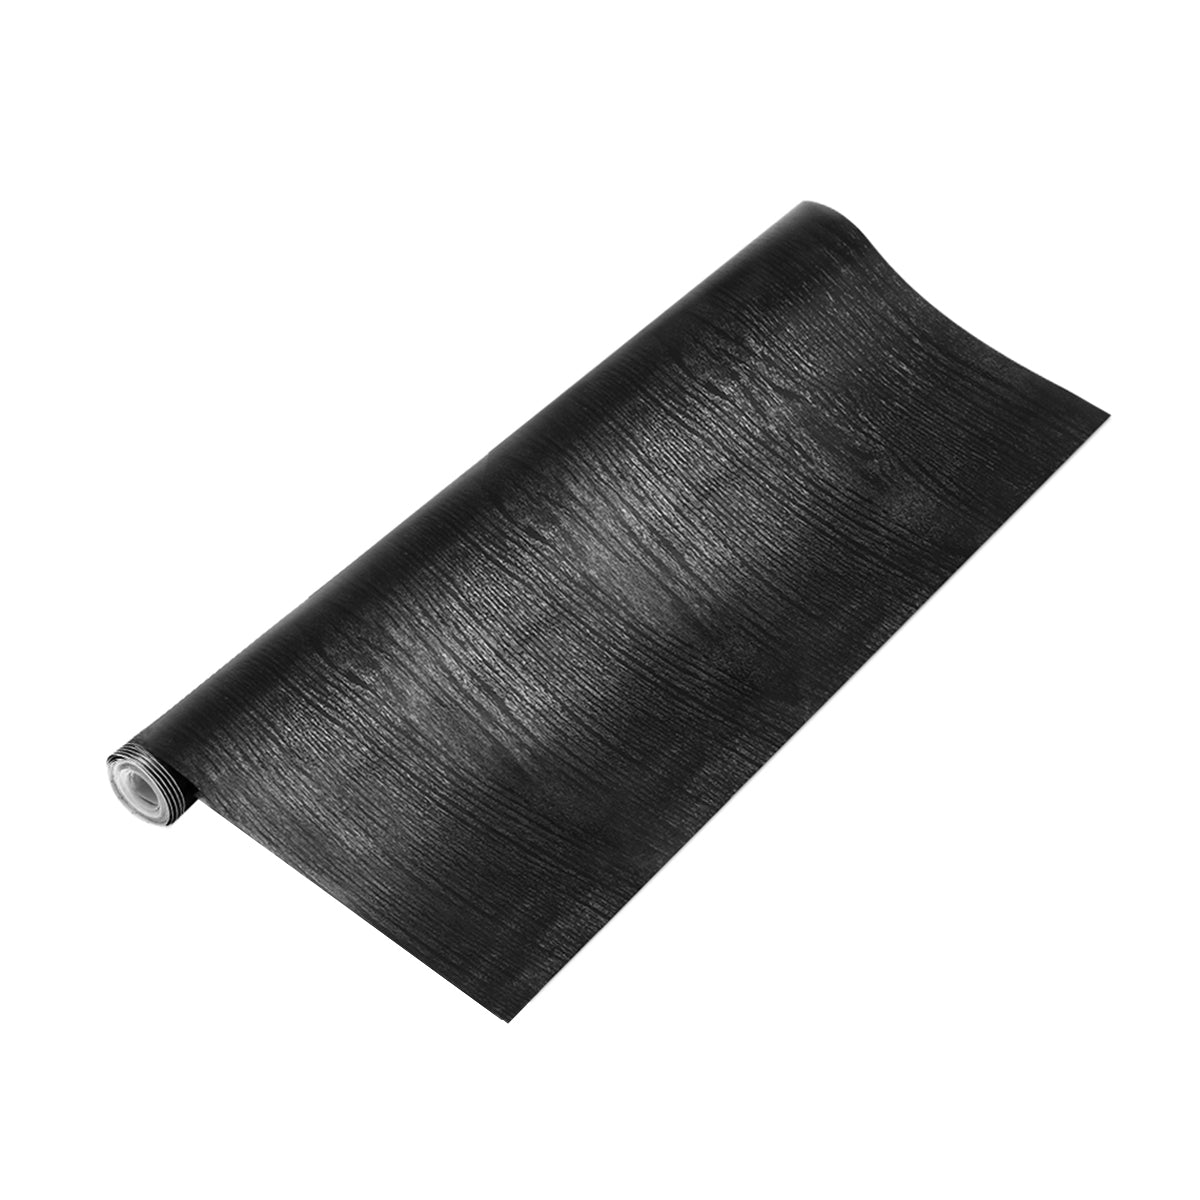 Black Wood Looking Textured Self Adhesive Decor Contact Paper Vinyl Shelf Liner Wall Paper